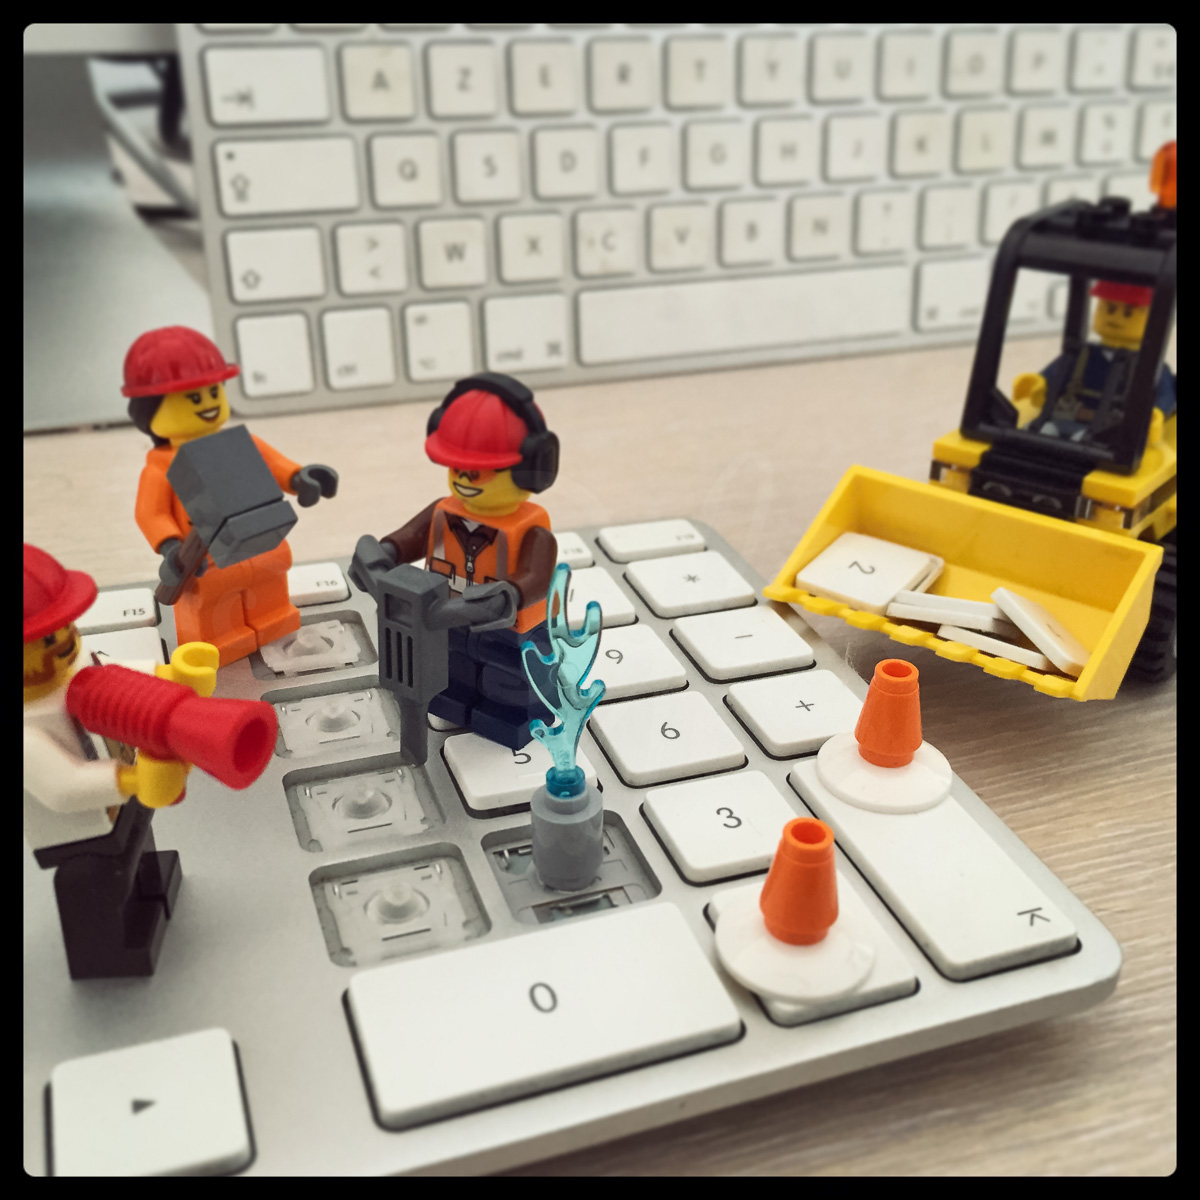 Lego en chantier sur le clavier